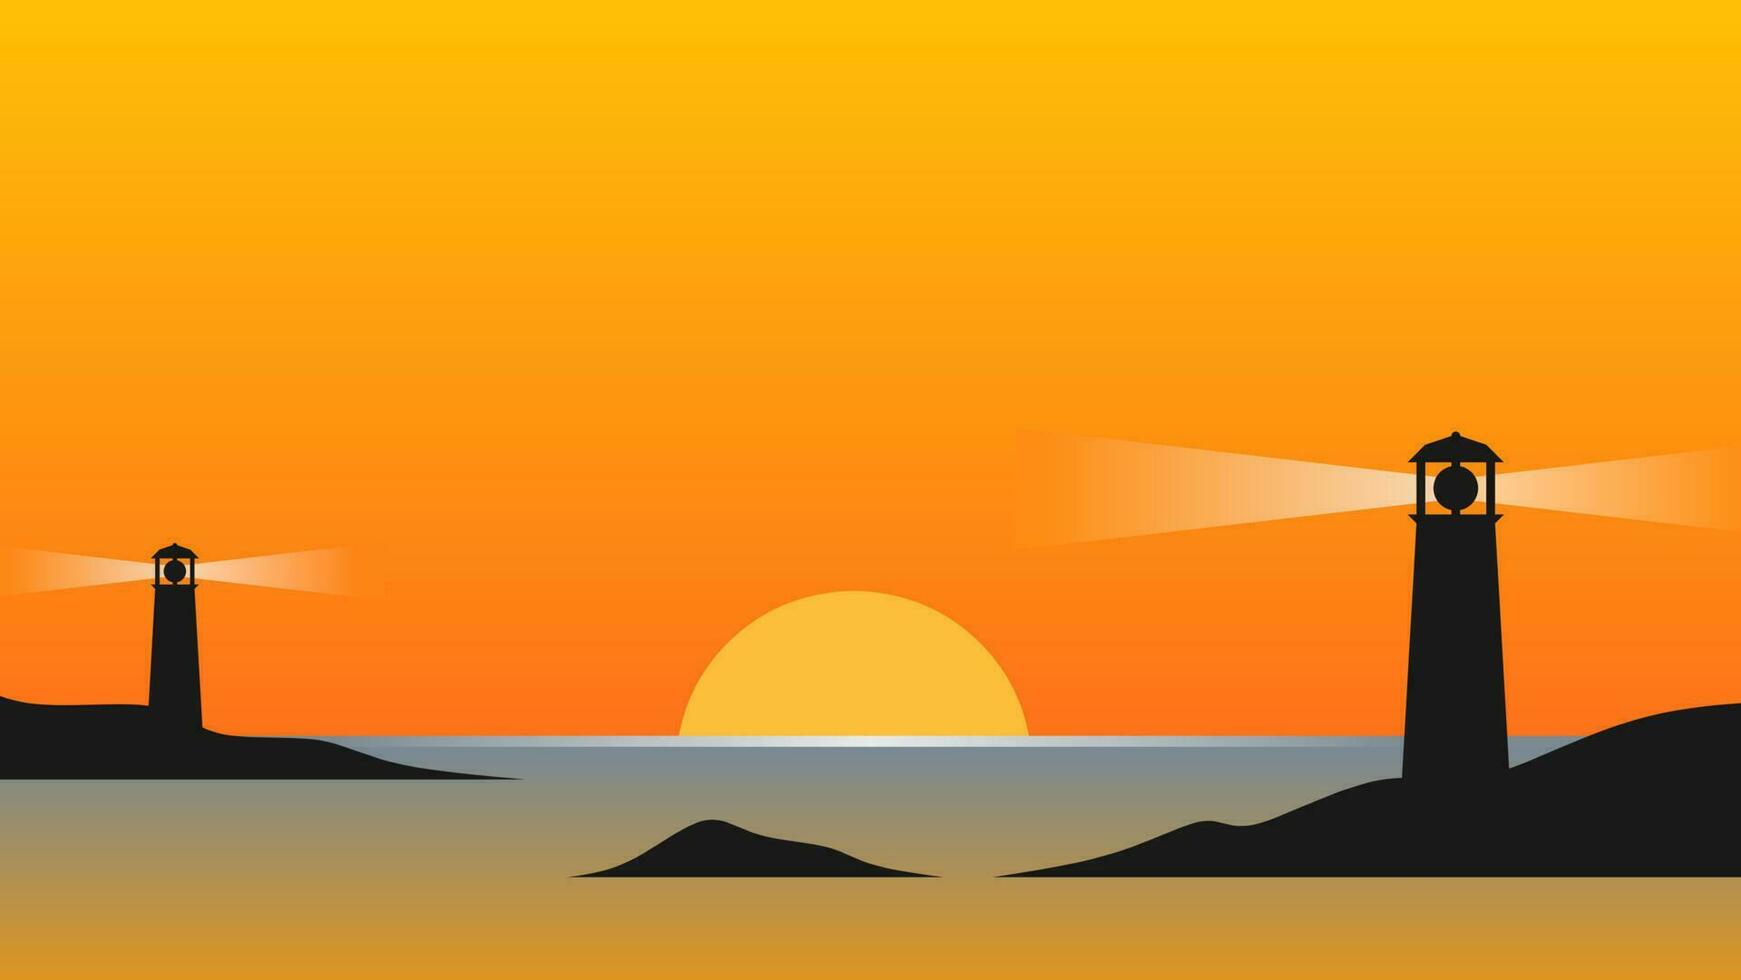 beautiful sunset beach vector landscape illustration